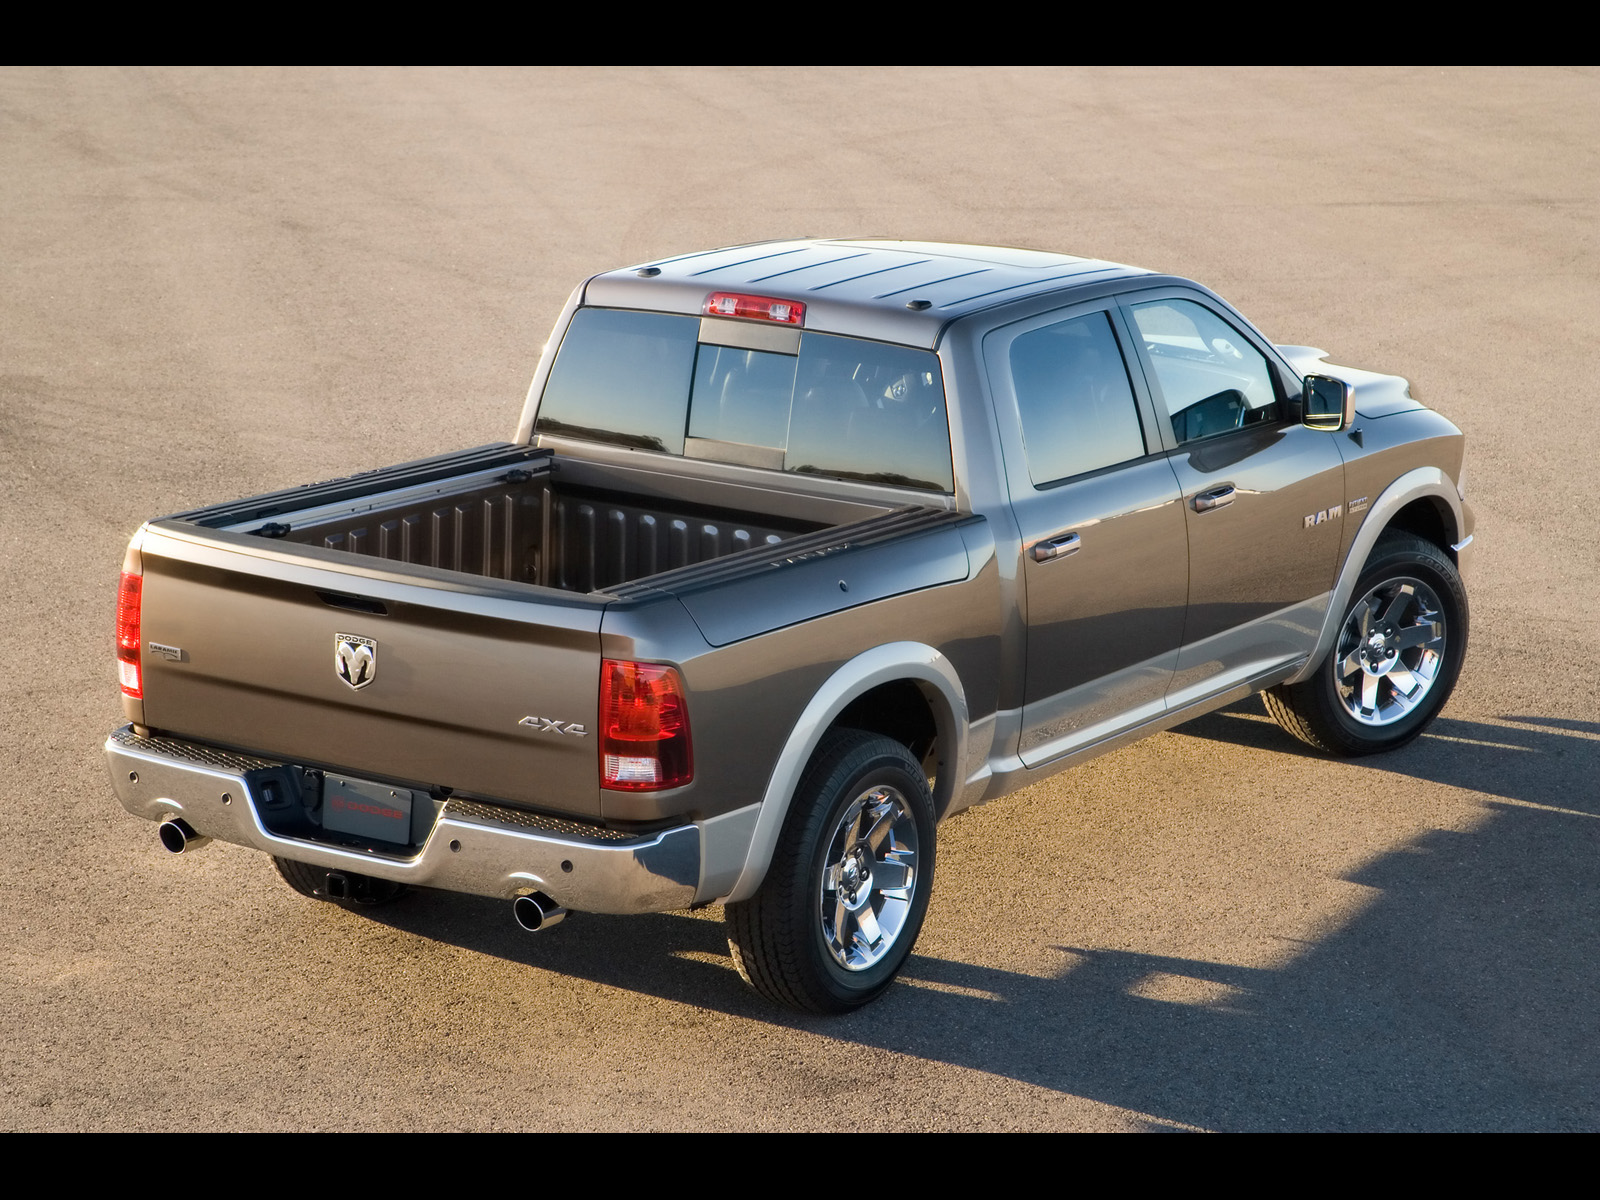 2009, Dodge, Ram, Pickup, Truck Wallpaper